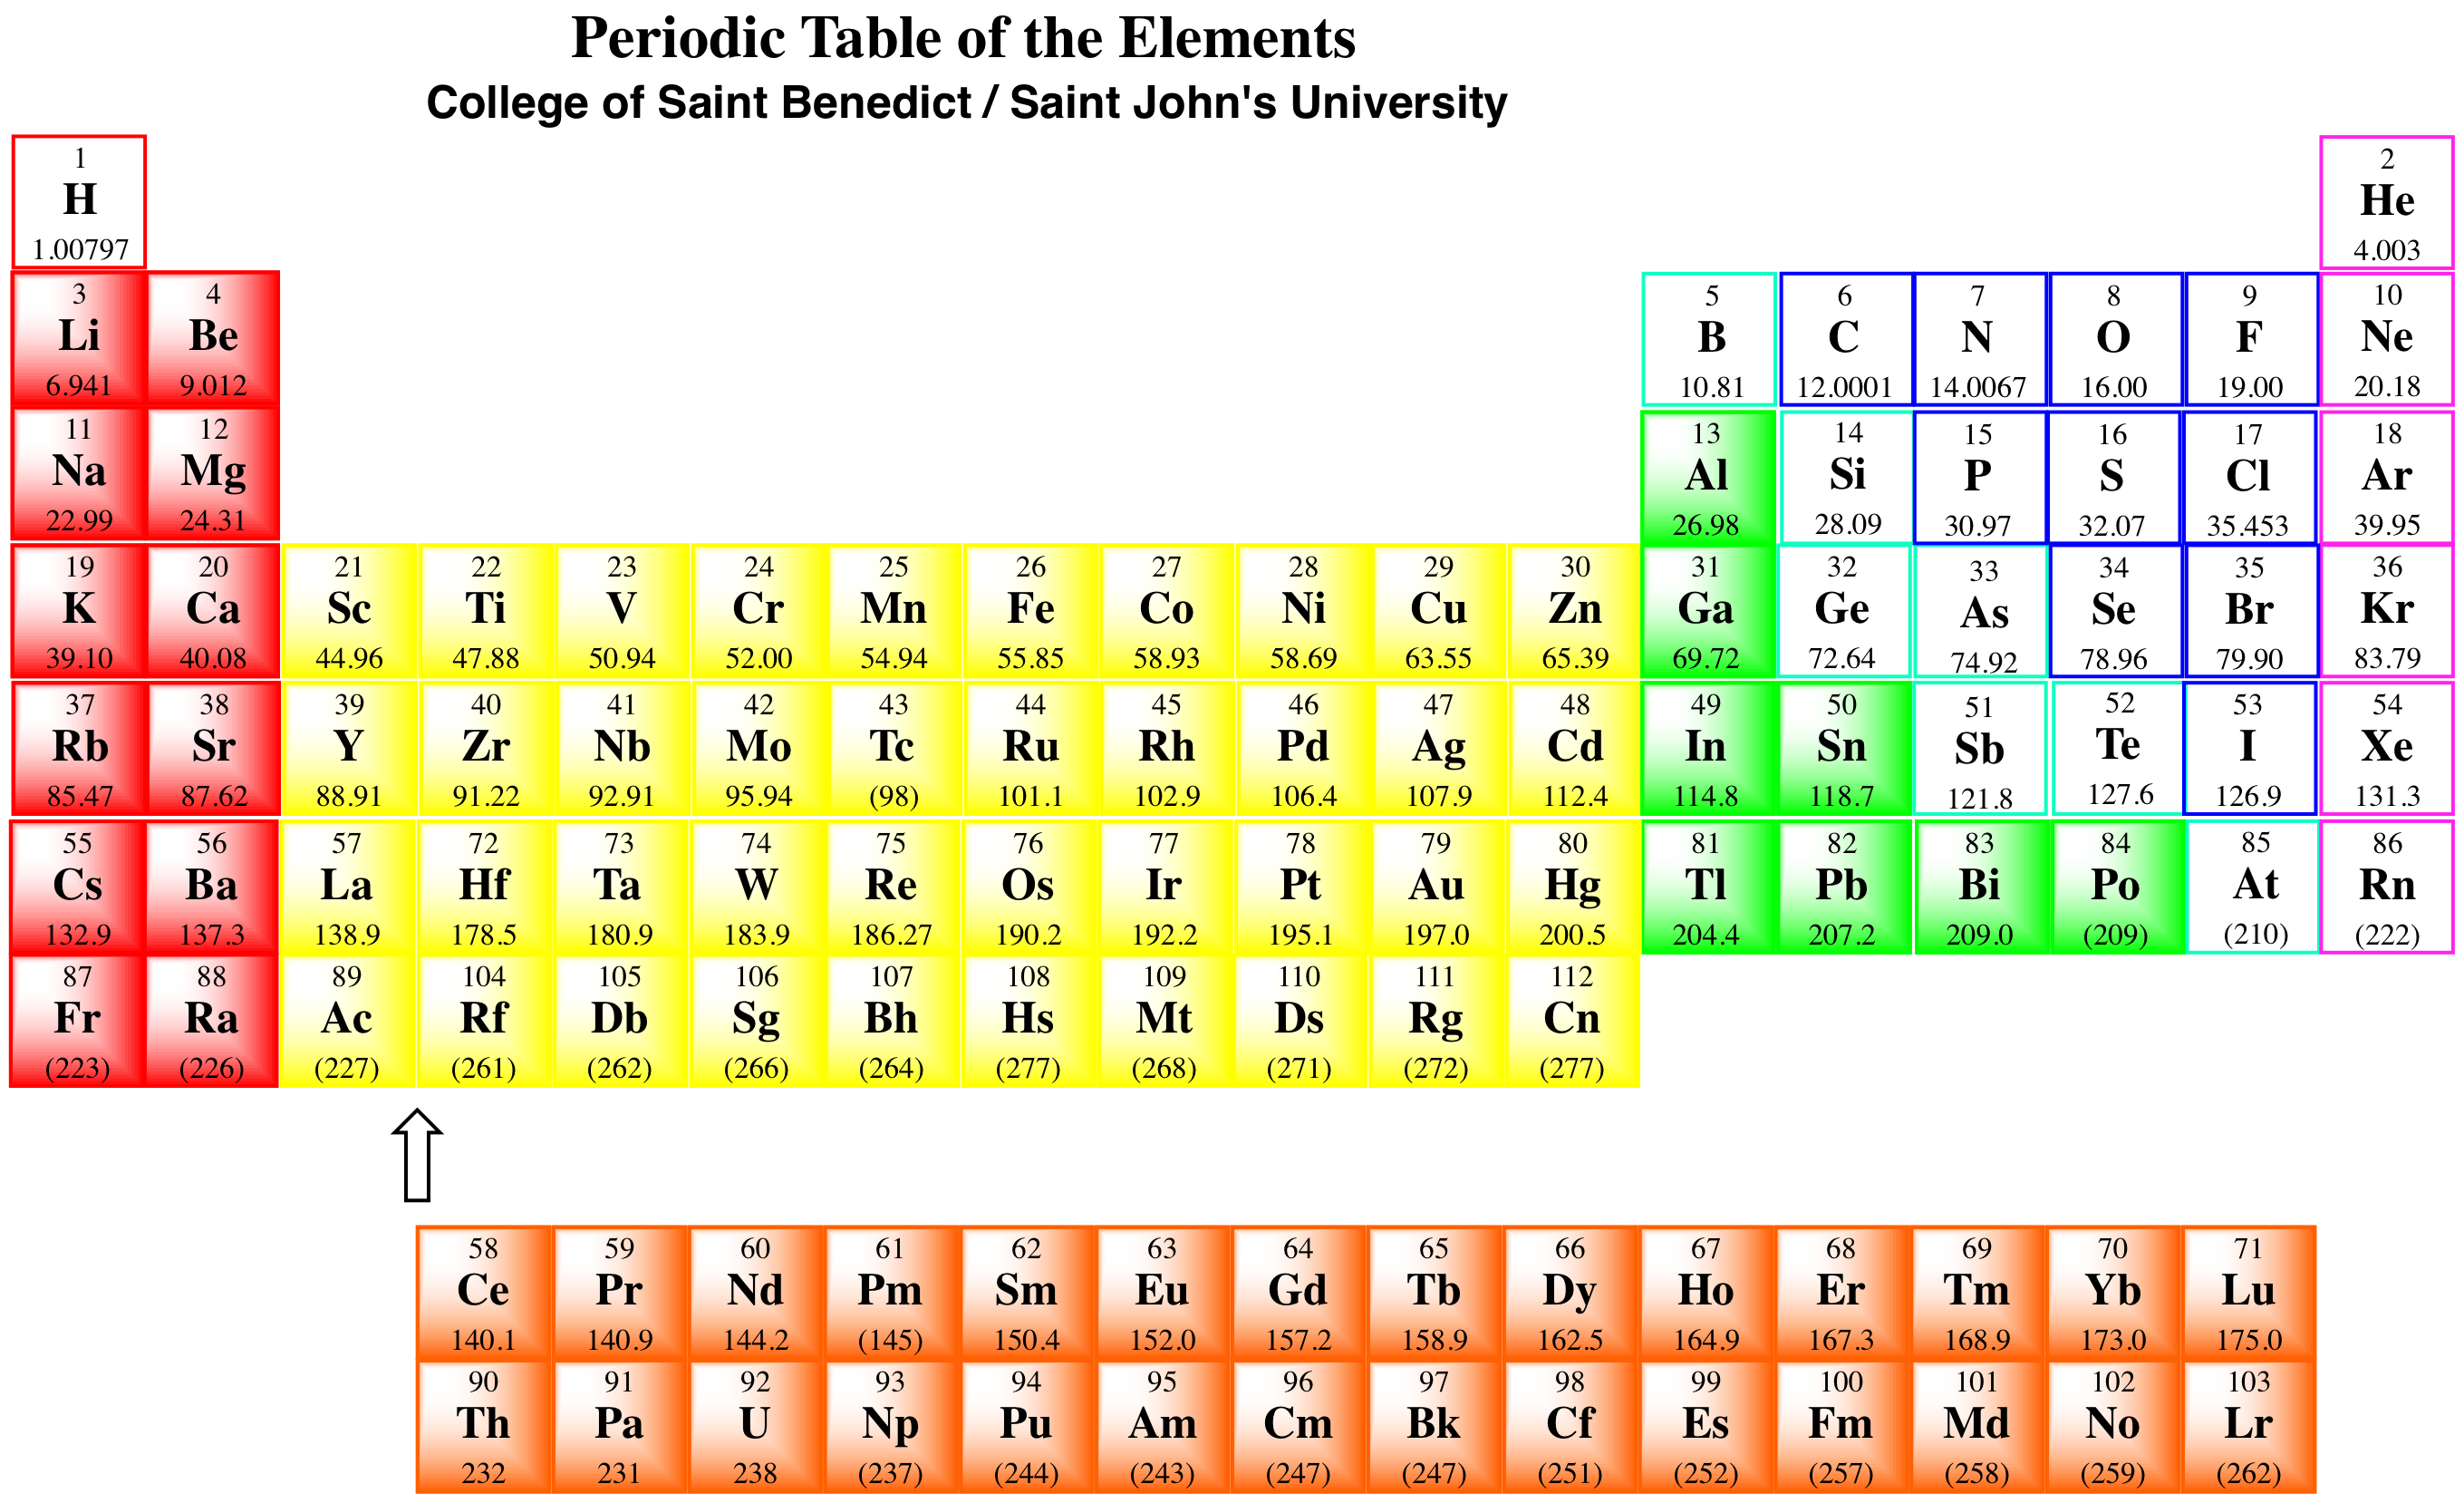 na element ion